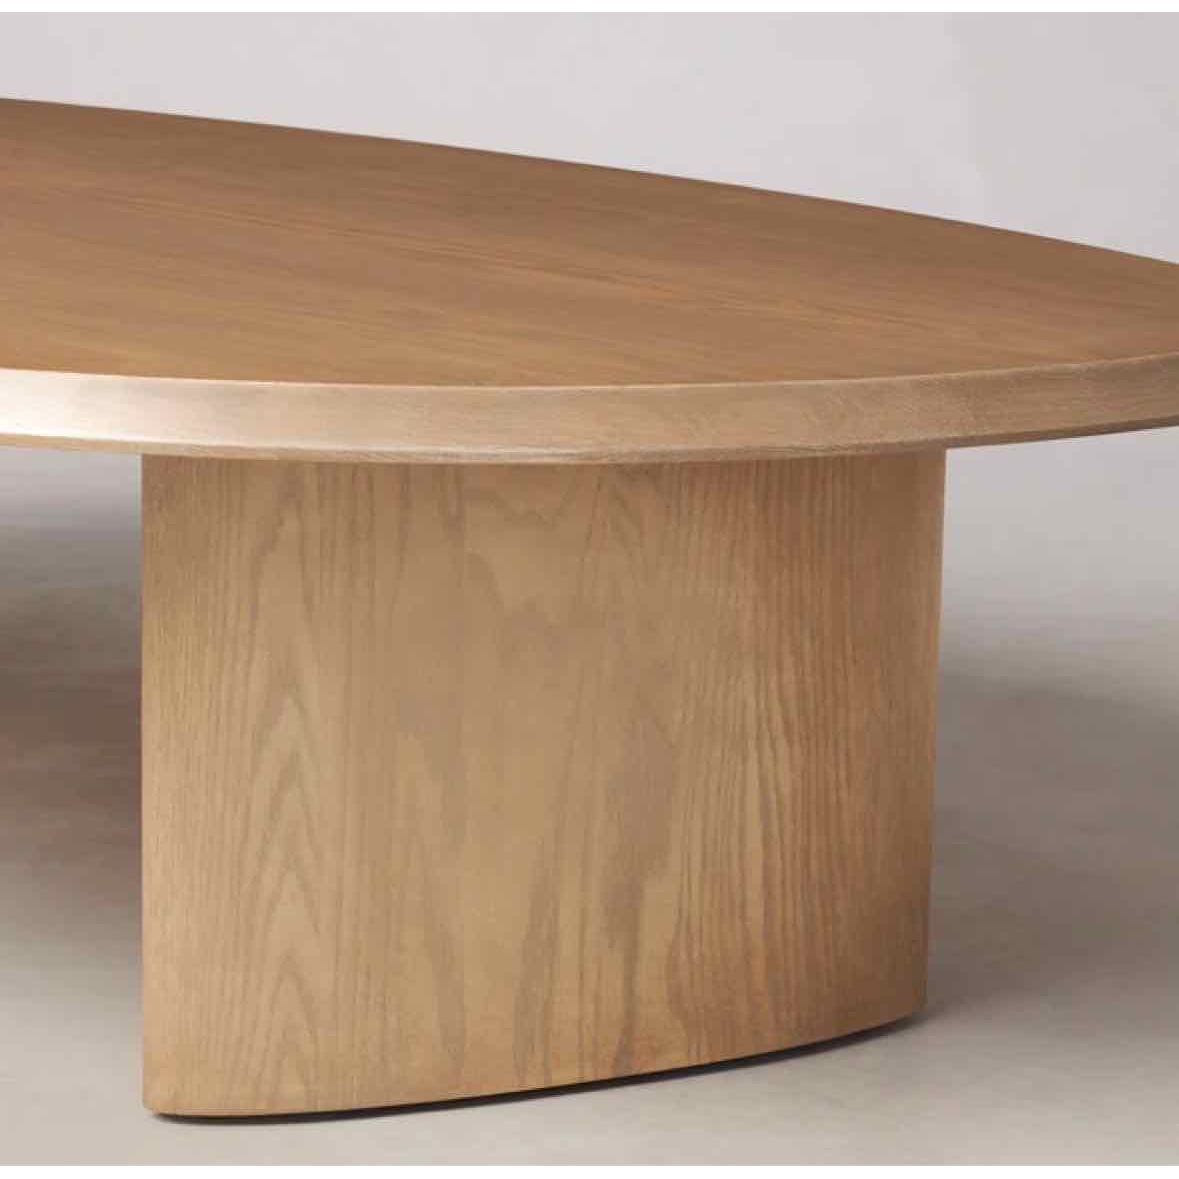 Asymmetrical Oak Coffee Table in Pecan Color 48"Wx30"Dx12"H